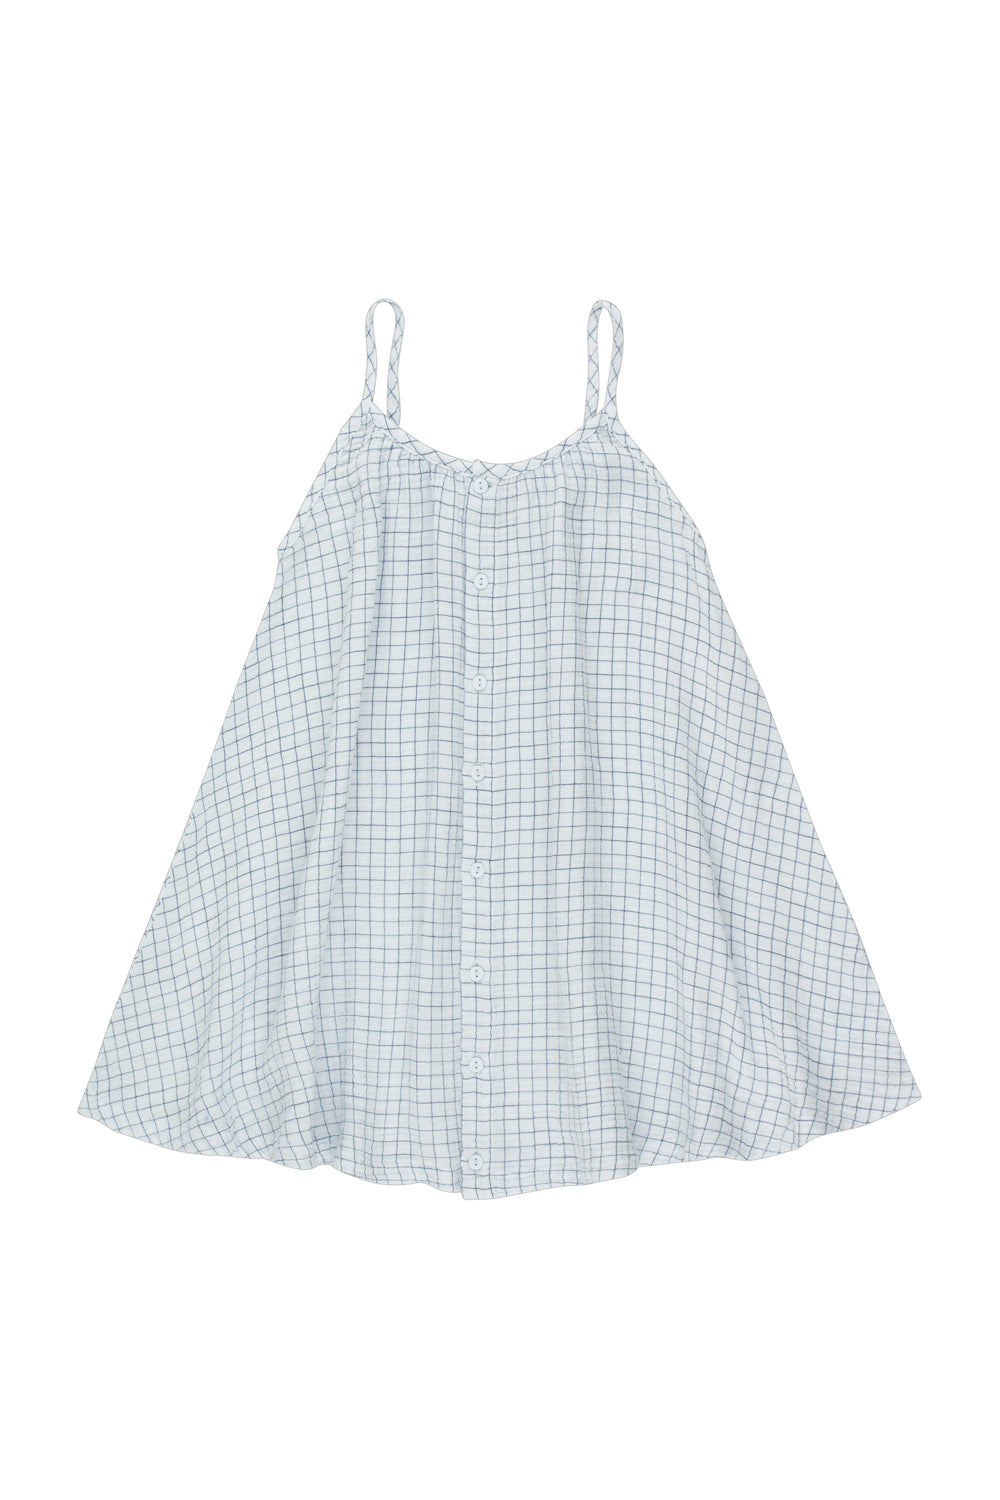 Tiny Cottons Grid Strap Dress - Pale Blue/Ultramarine